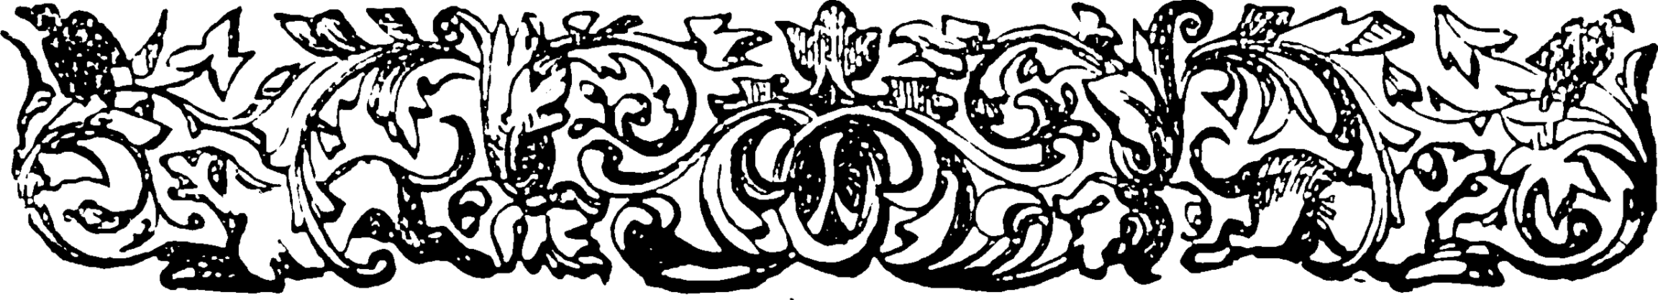 clip art clipart svg openclipart black bird white outline decorative decoration banner design lineart divider detail tangled extreme attern branches books 剪贴画 装饰 线描 线条画 黑色 白色 设计 鸟 横幅